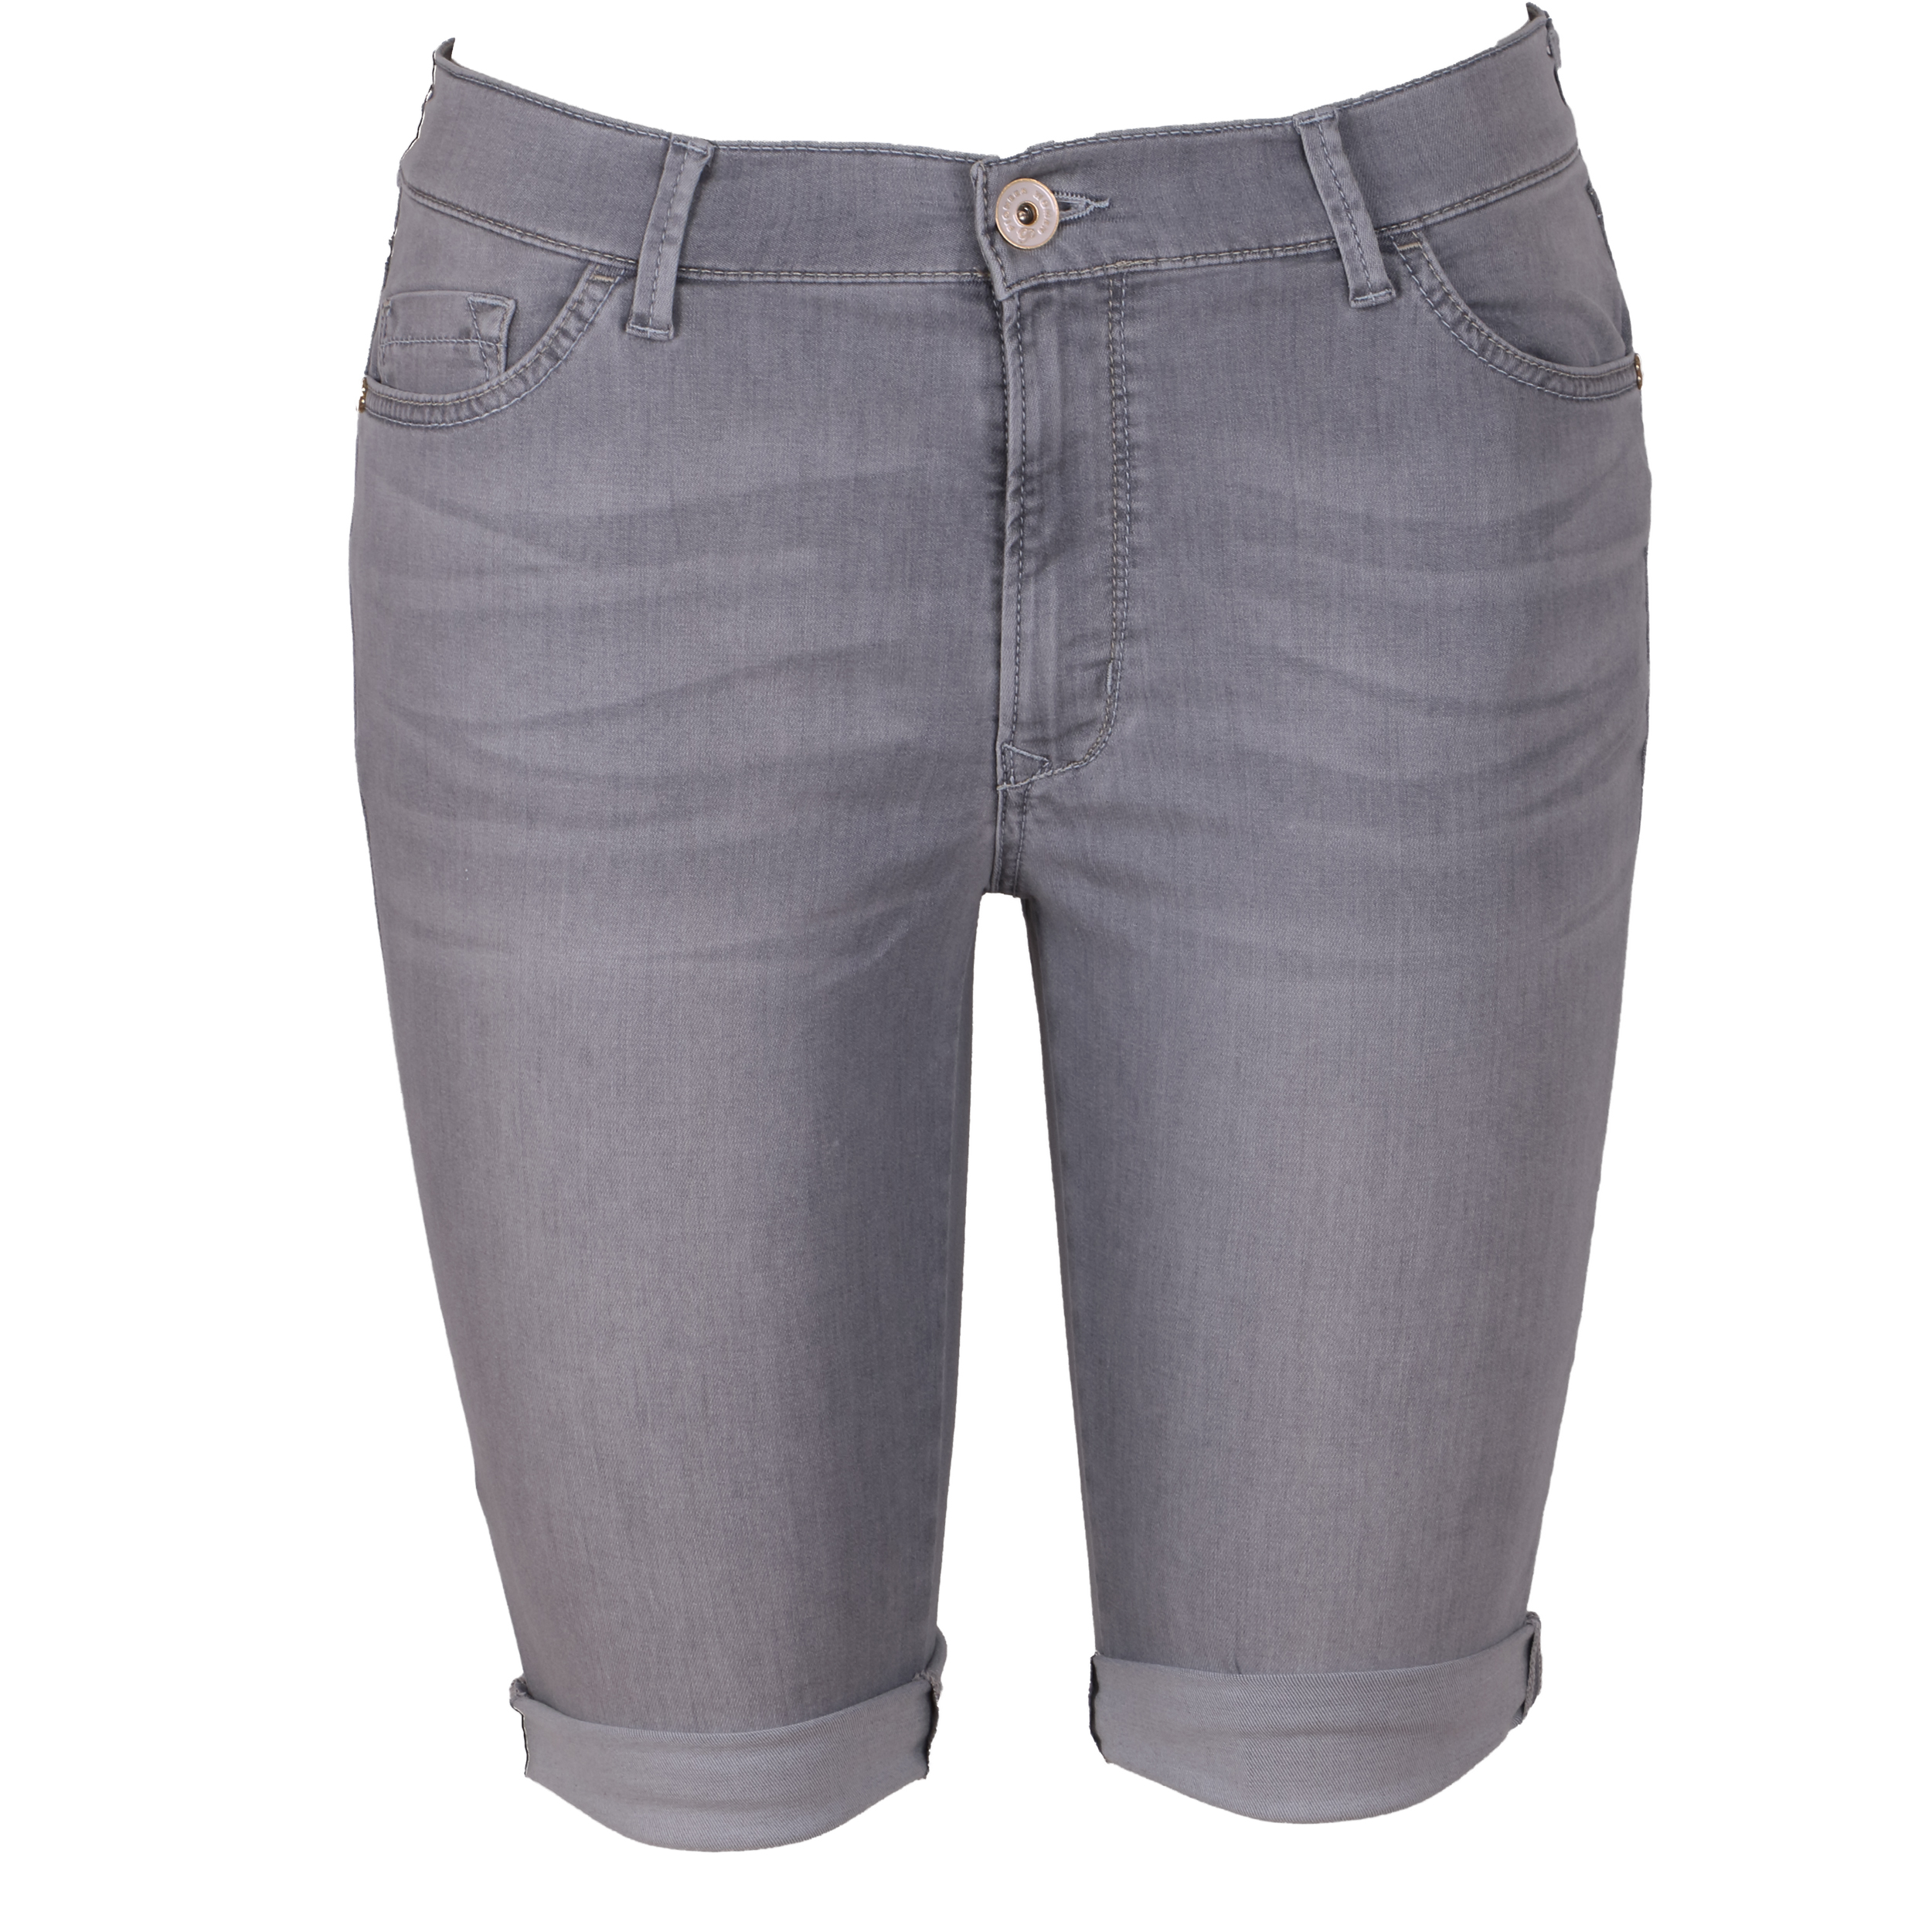 Pioneer Damen Jeans-Shorts 40 grau